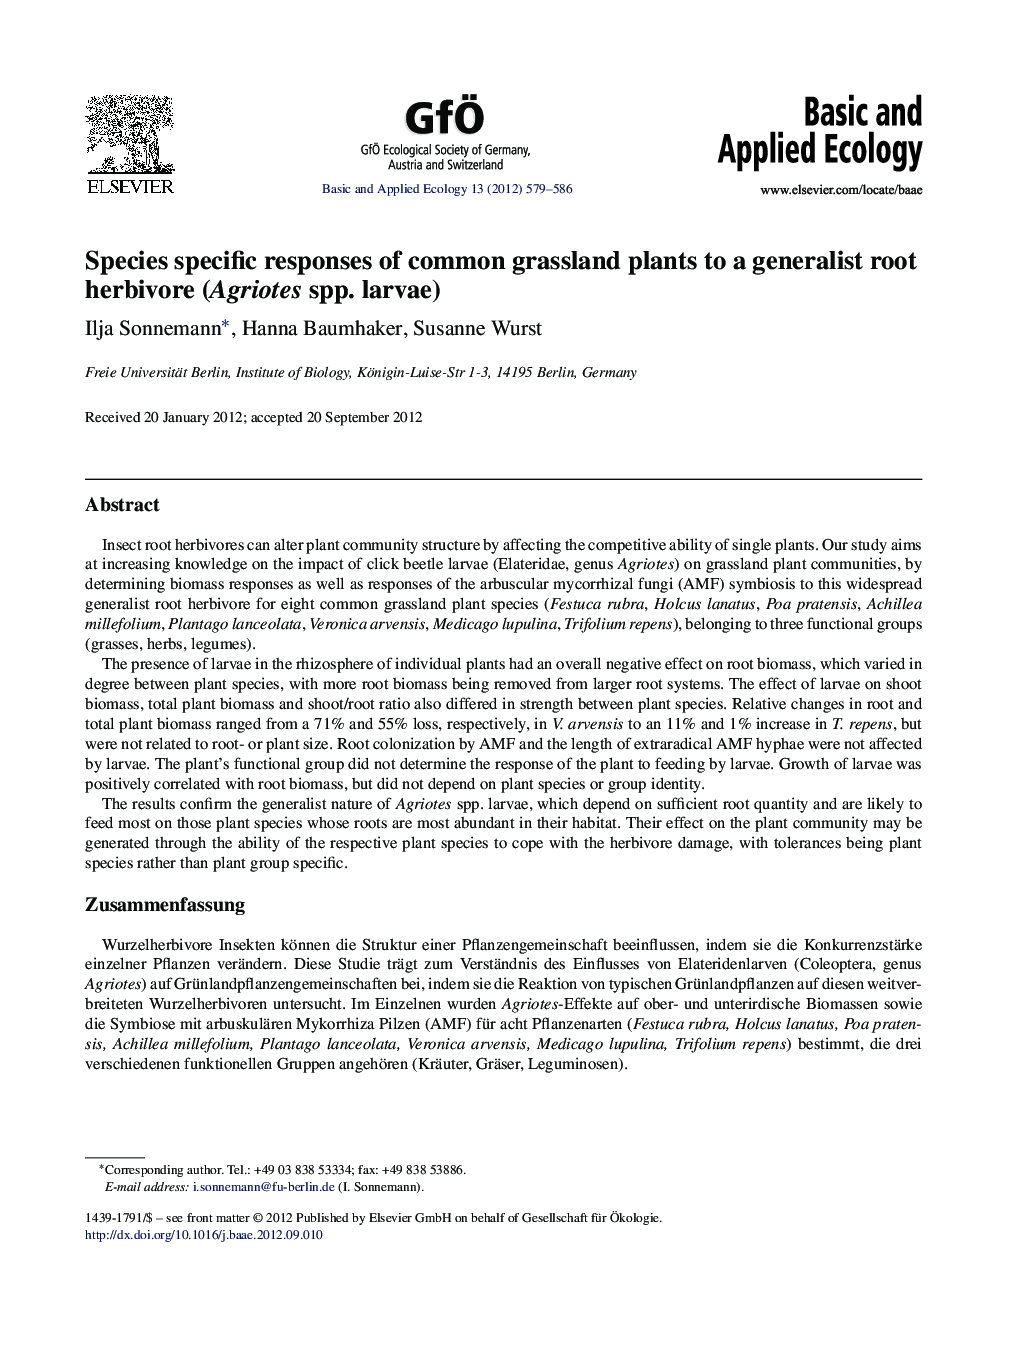 Species specific responses of common grassland plants to a generalist root herbivore (Agriotes spp. larvae)